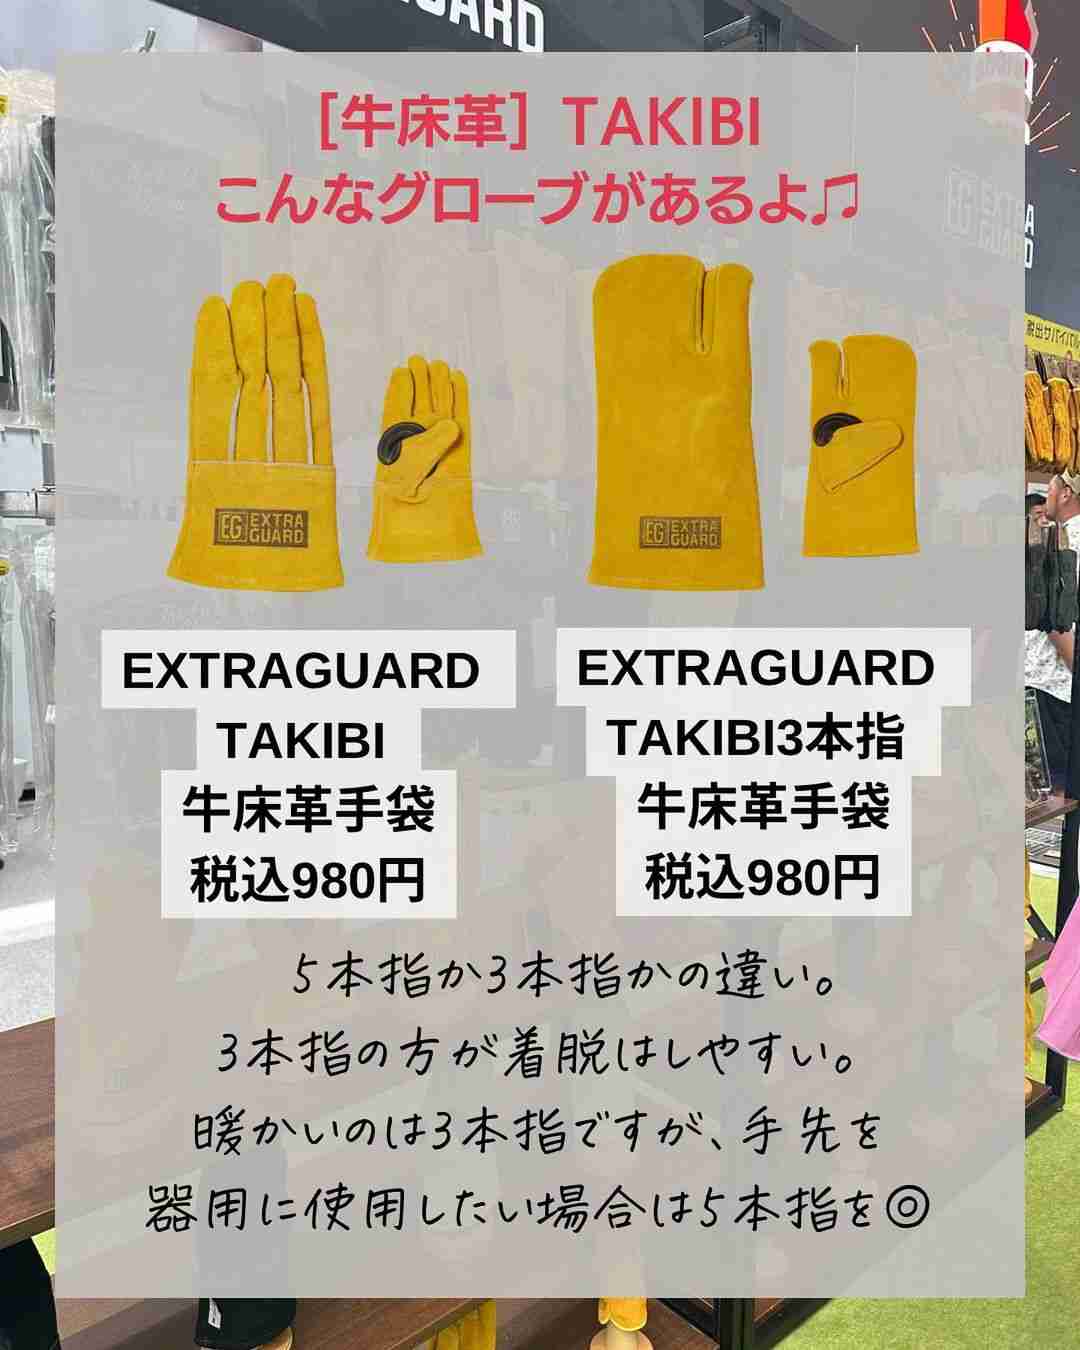 y11campさんおすすめの「EXTRAGUARD TAKIBI 牛床革手袋」「EXTRAGUARD TAKIBI3本指 牛床革手袋」